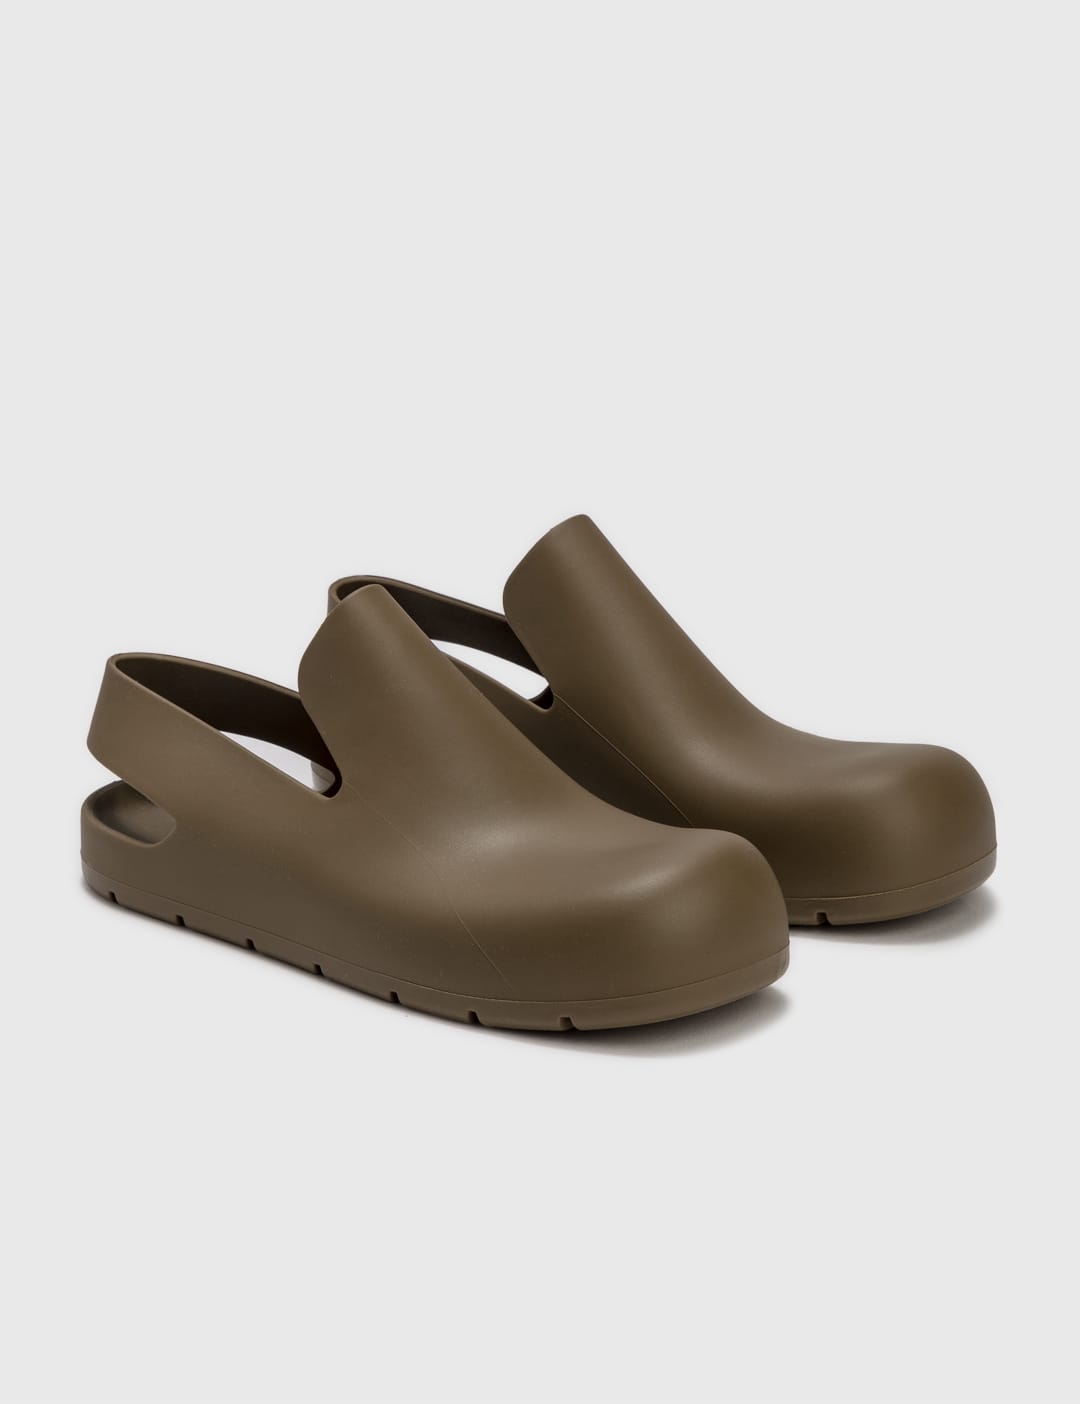 Bottega Veneta Puddle Sandals パドルサンダル靴 - サンダル